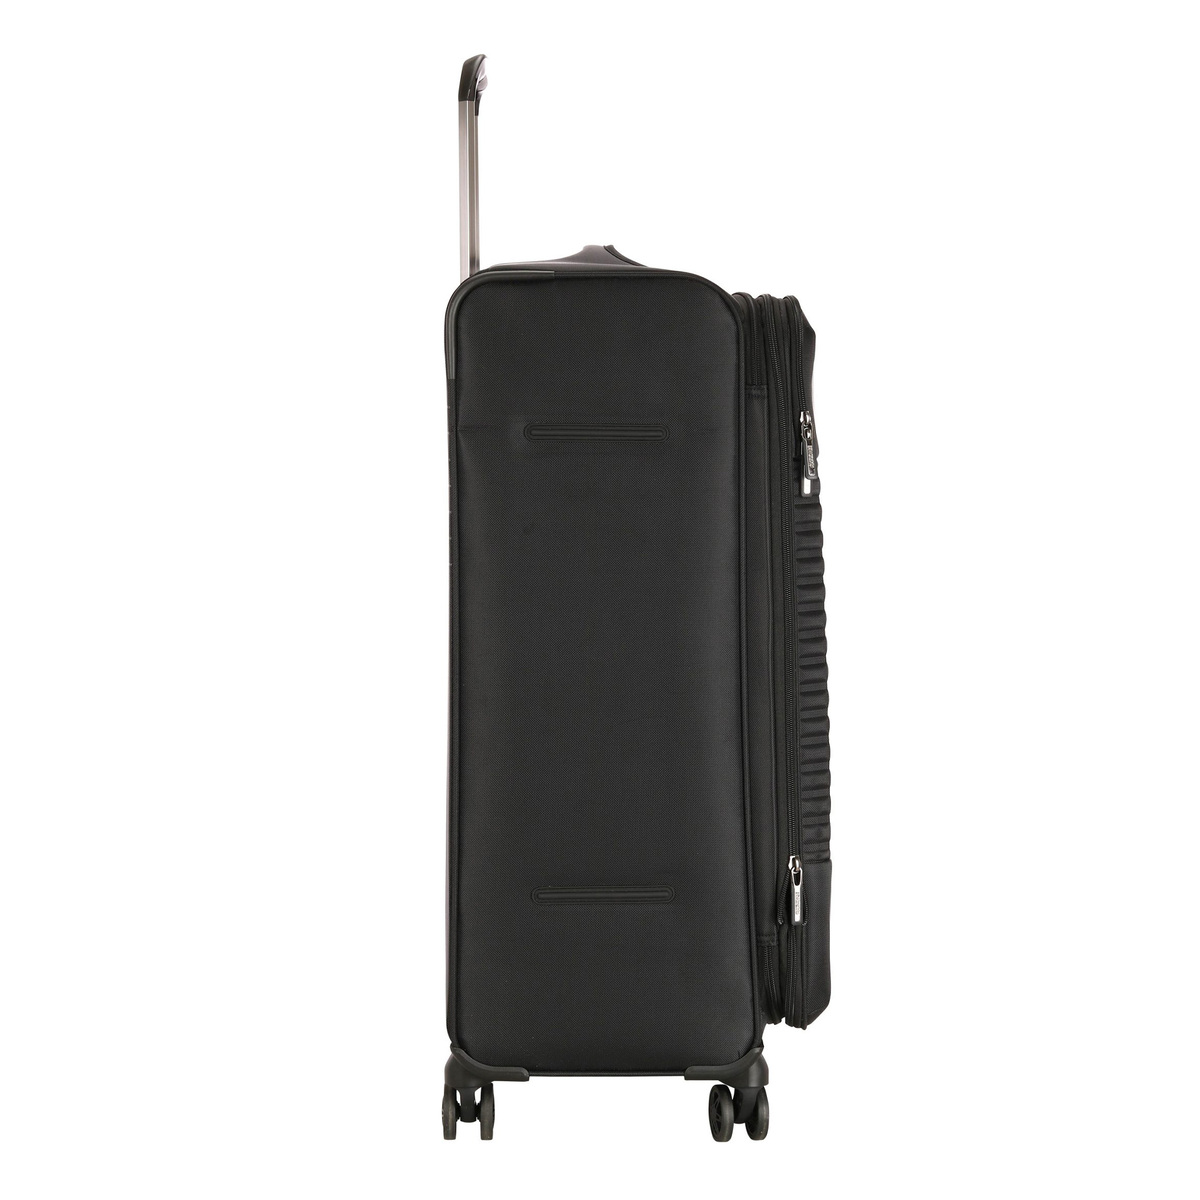 امريكان توريستر حقيبة سفر بعجلات مرنة فورناكس سبينر مع قفل TSA، 55 سم، أسود داكن